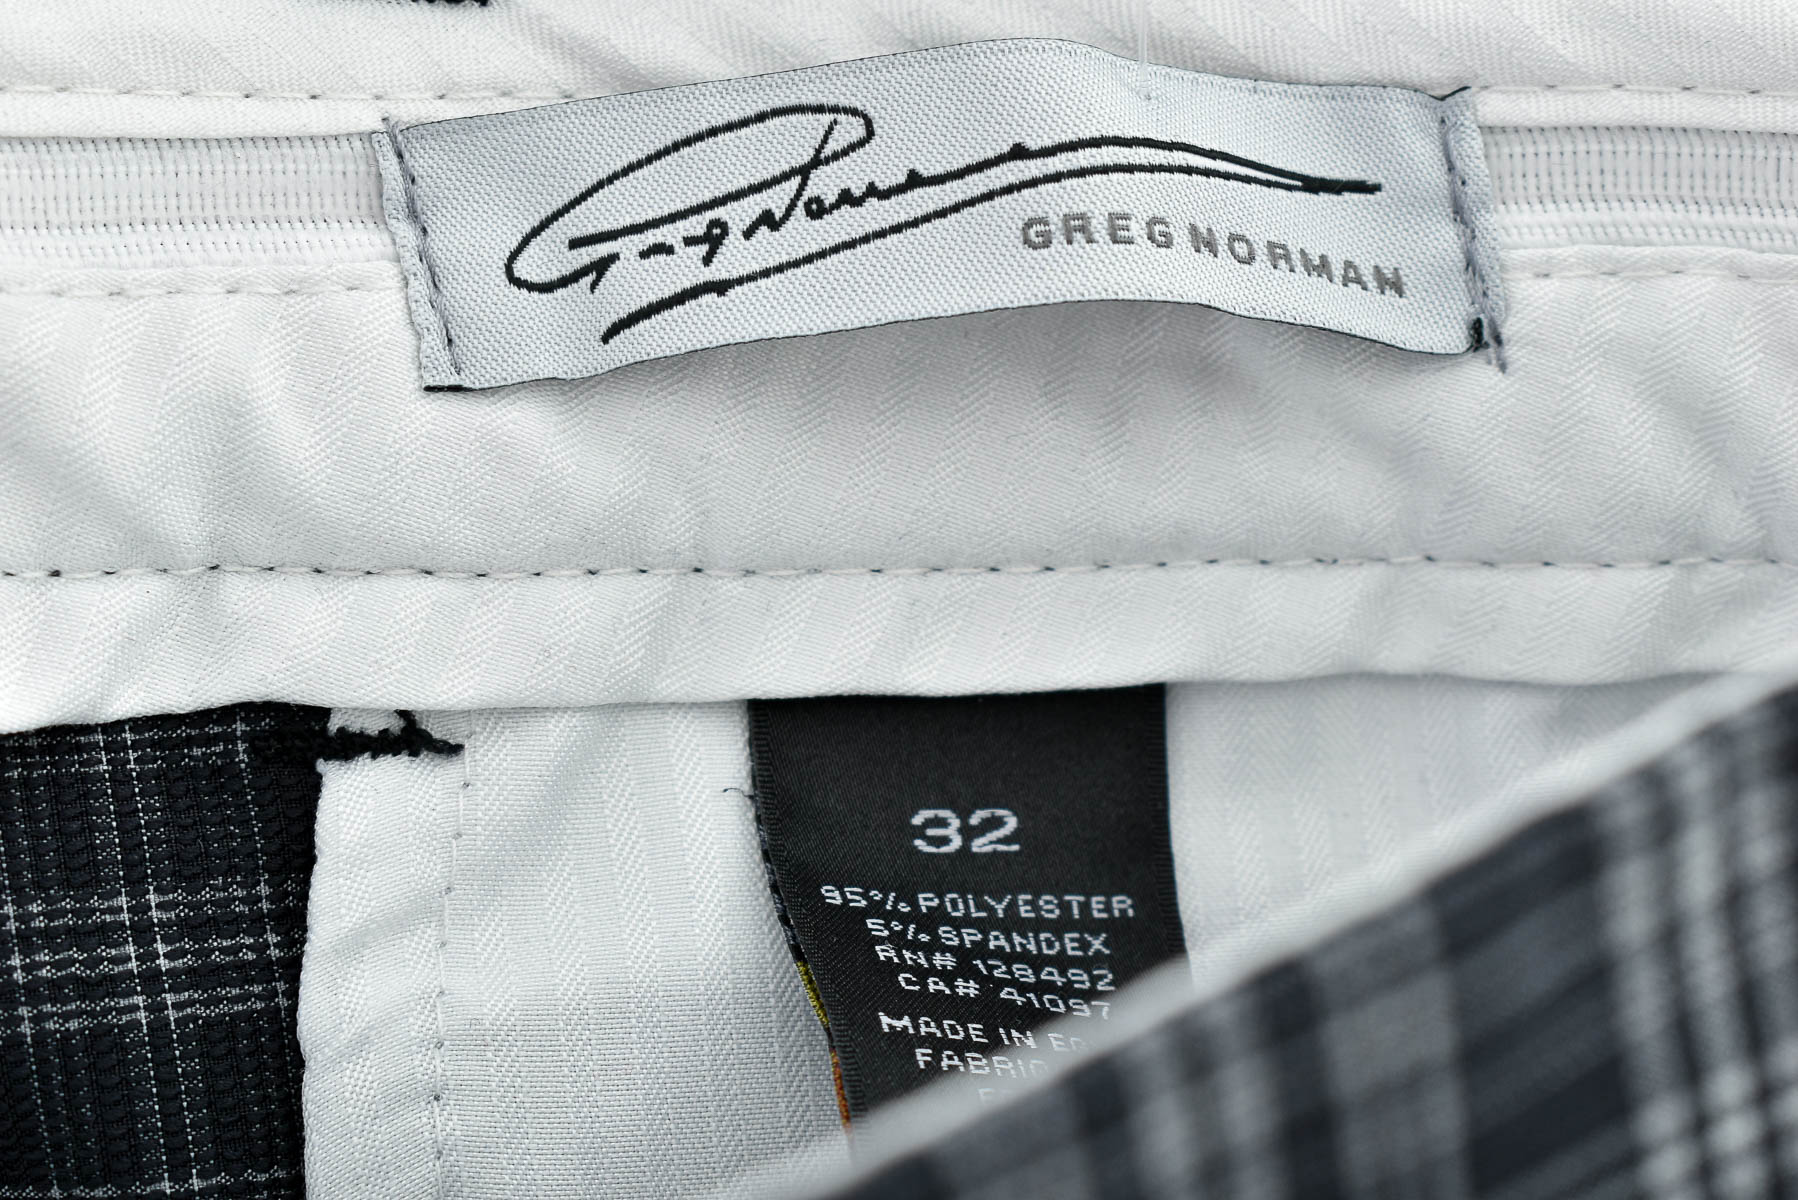 Men's shorts - Greg Norman - 2